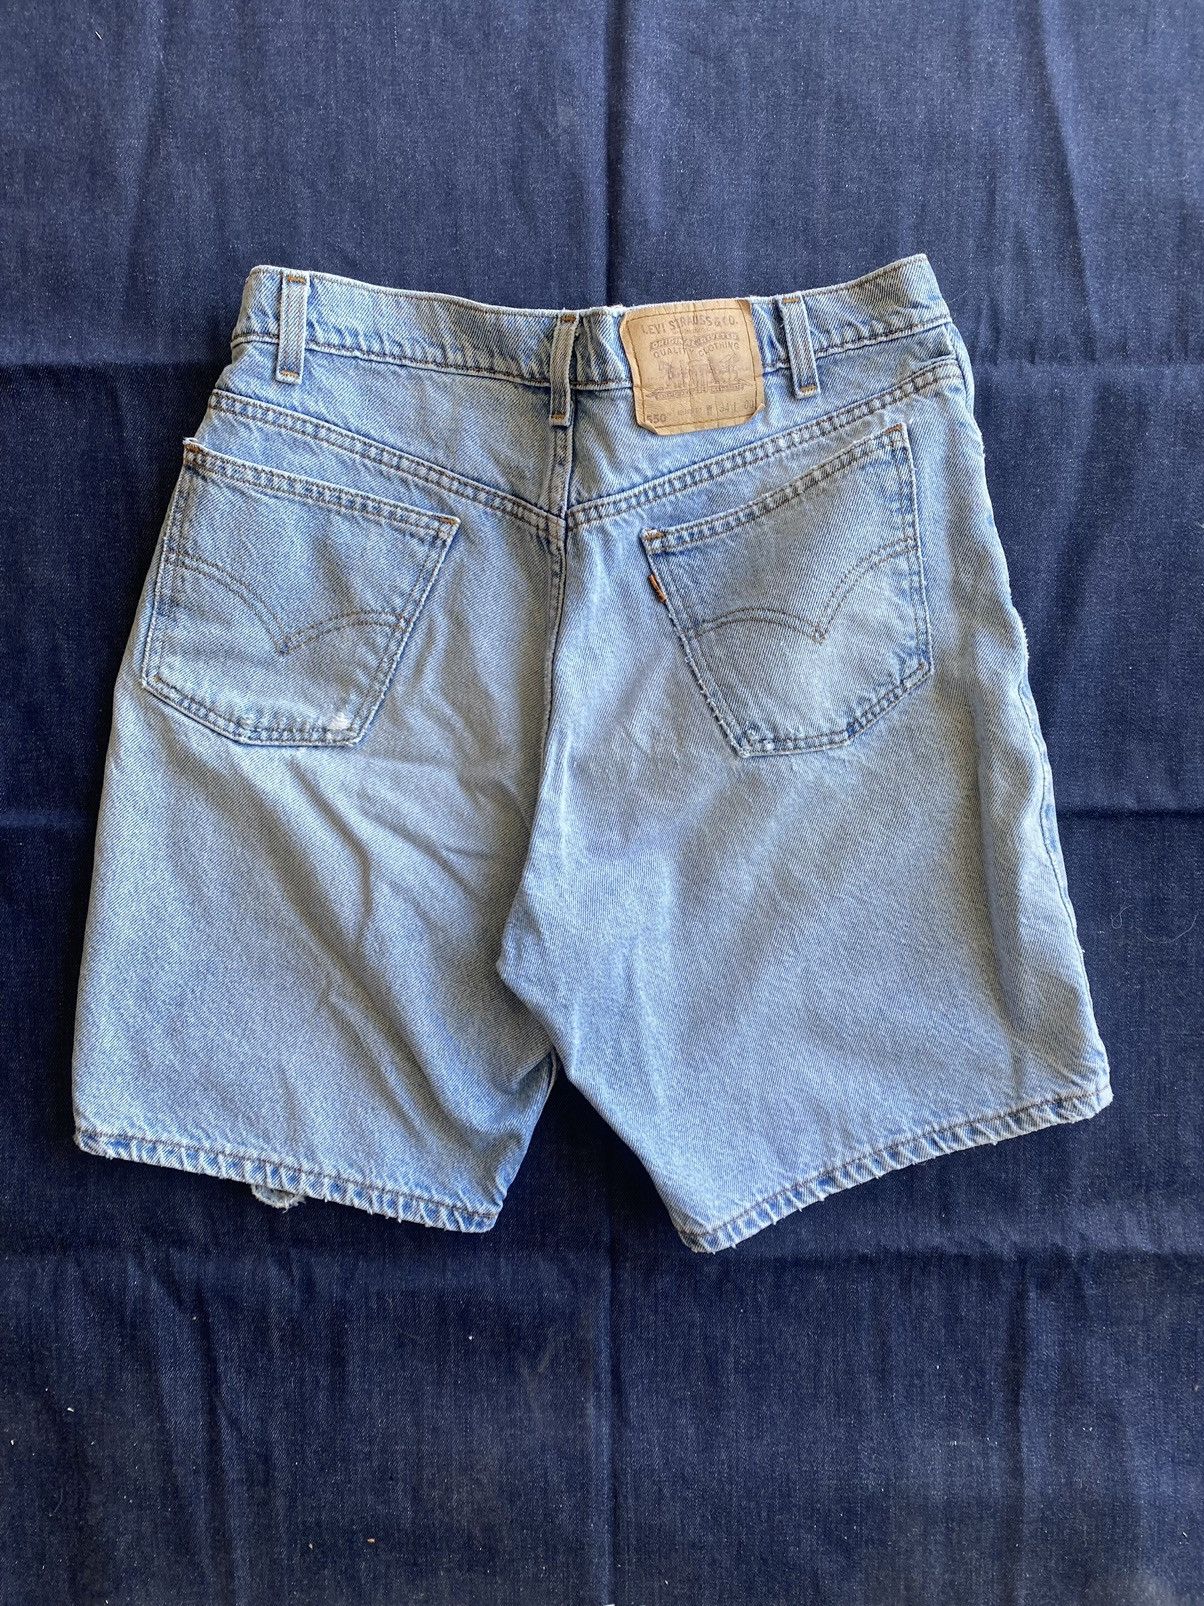 Vintage Vintage y2k Levi’s 550 orange tab jean shorts Levi’s jorts Size US 32 / EU 48 - 4 Thumbnail